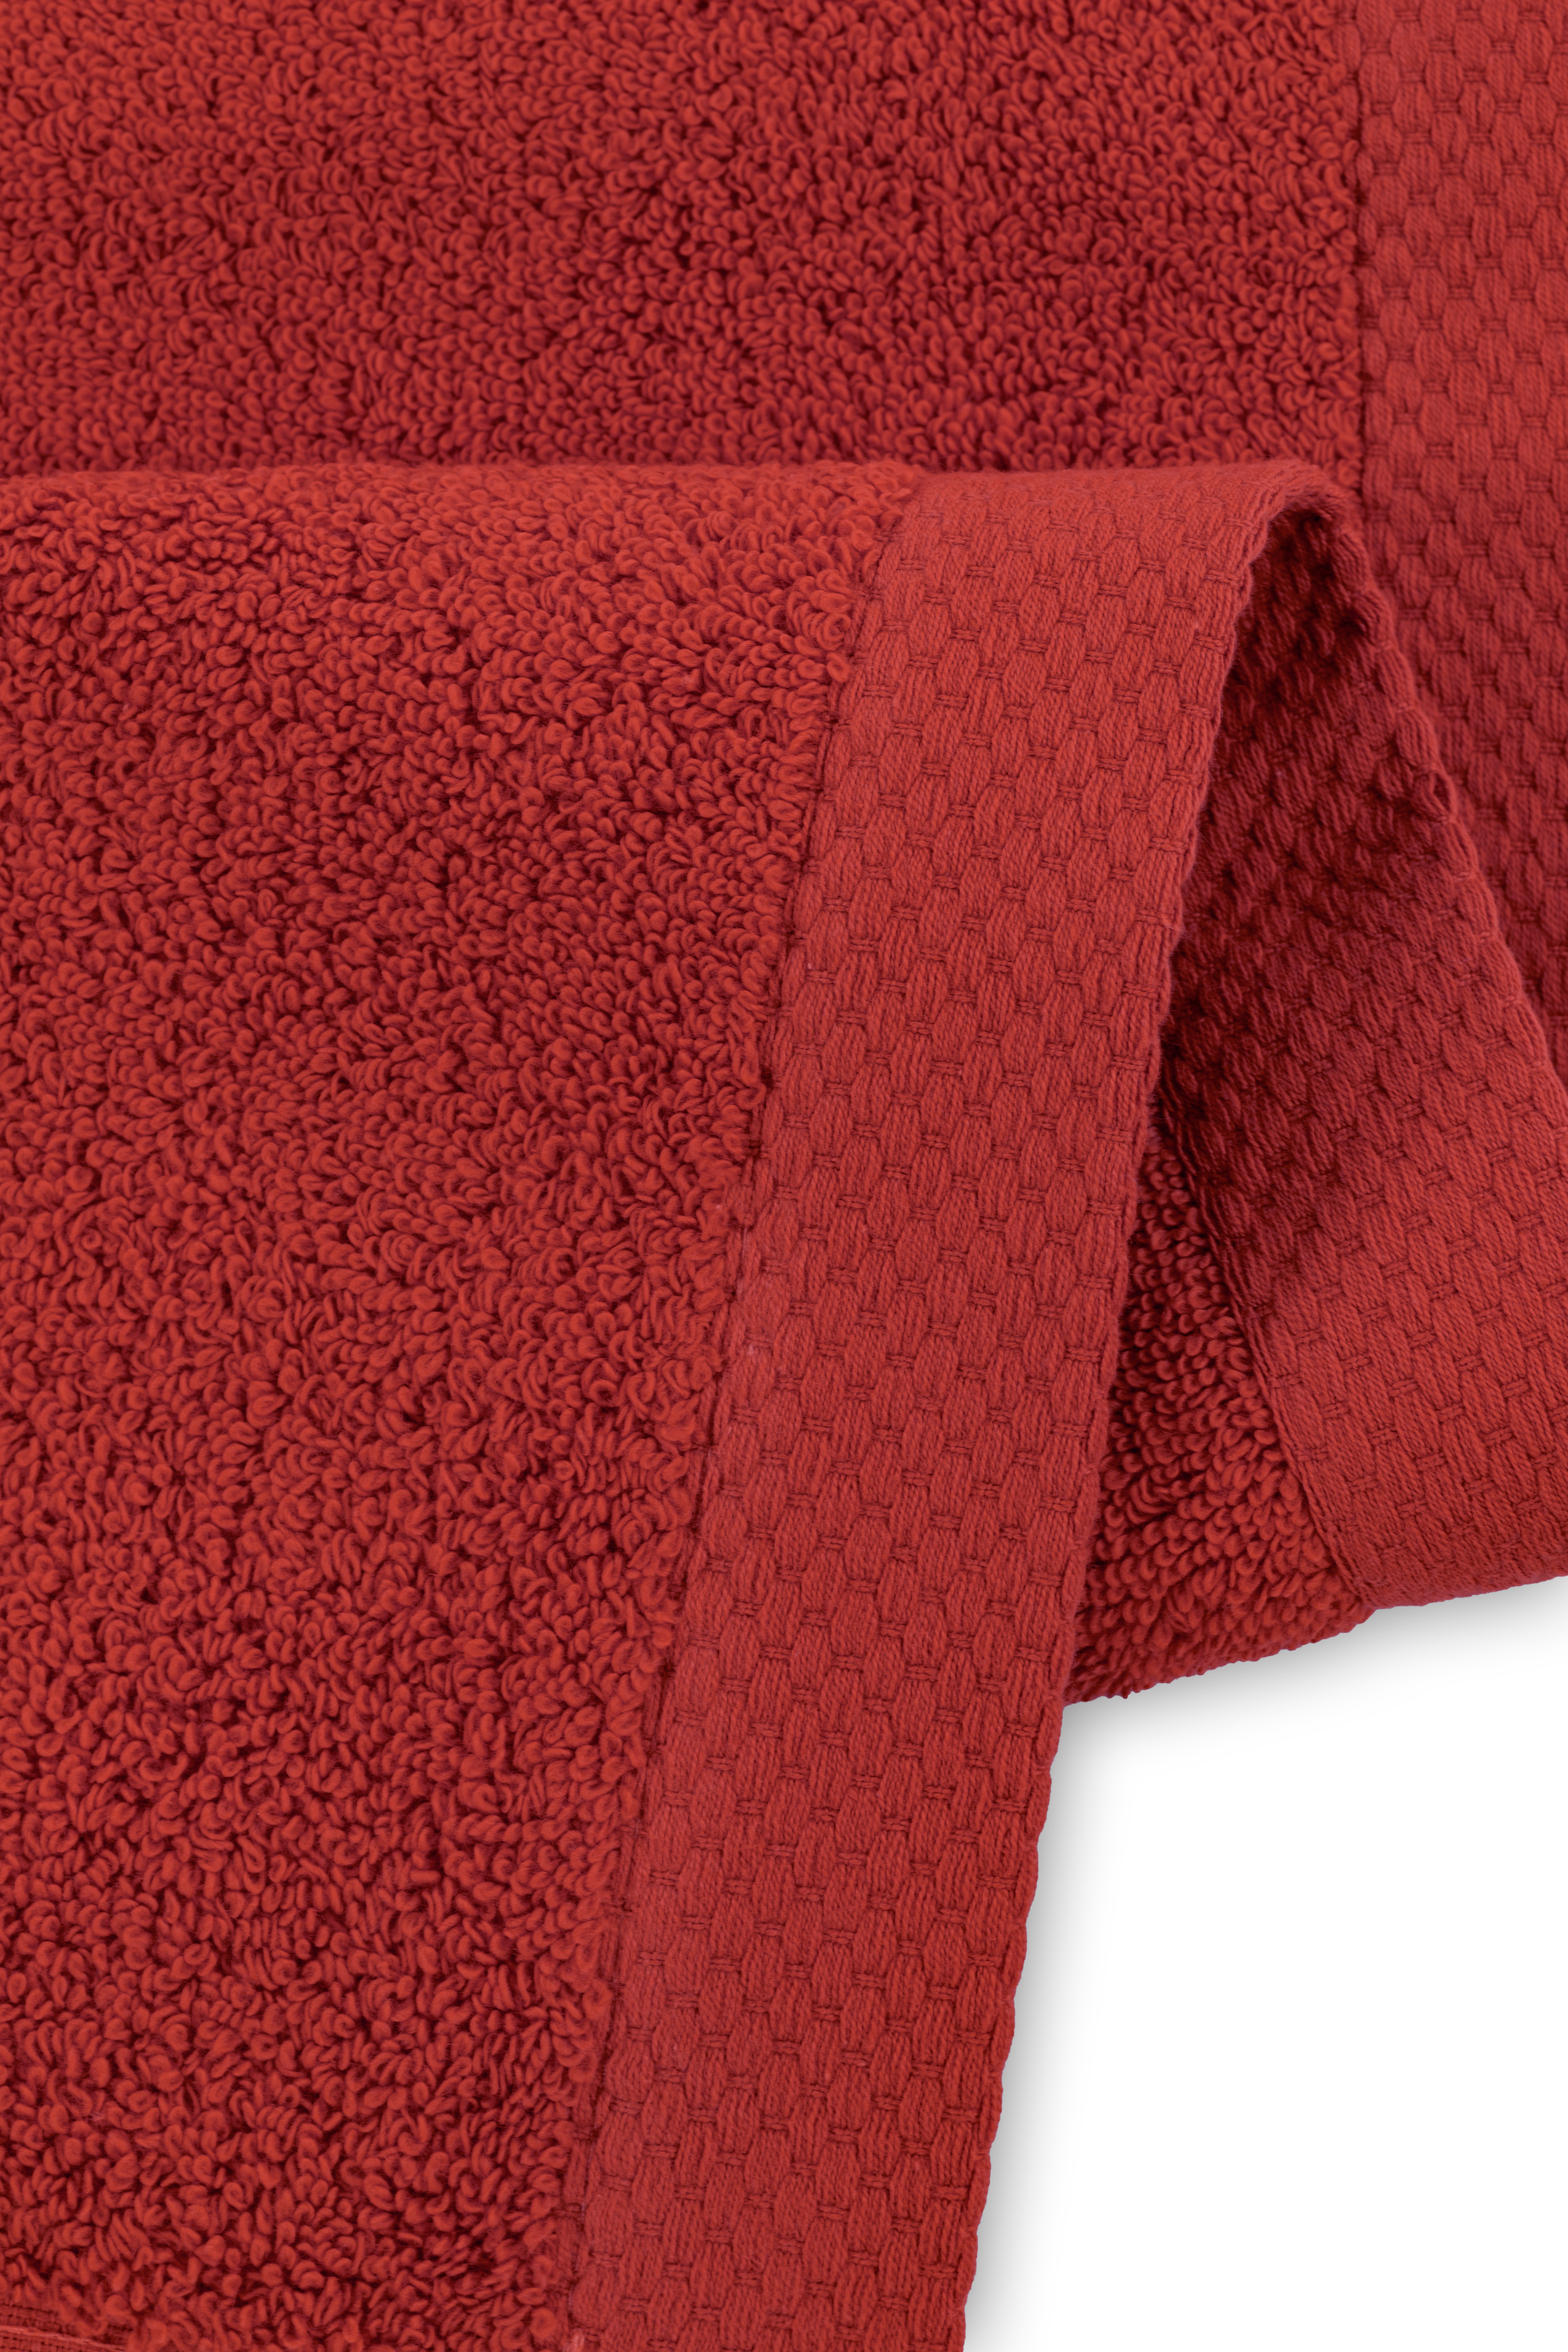 Bath towel DELUX 50x100cm, red